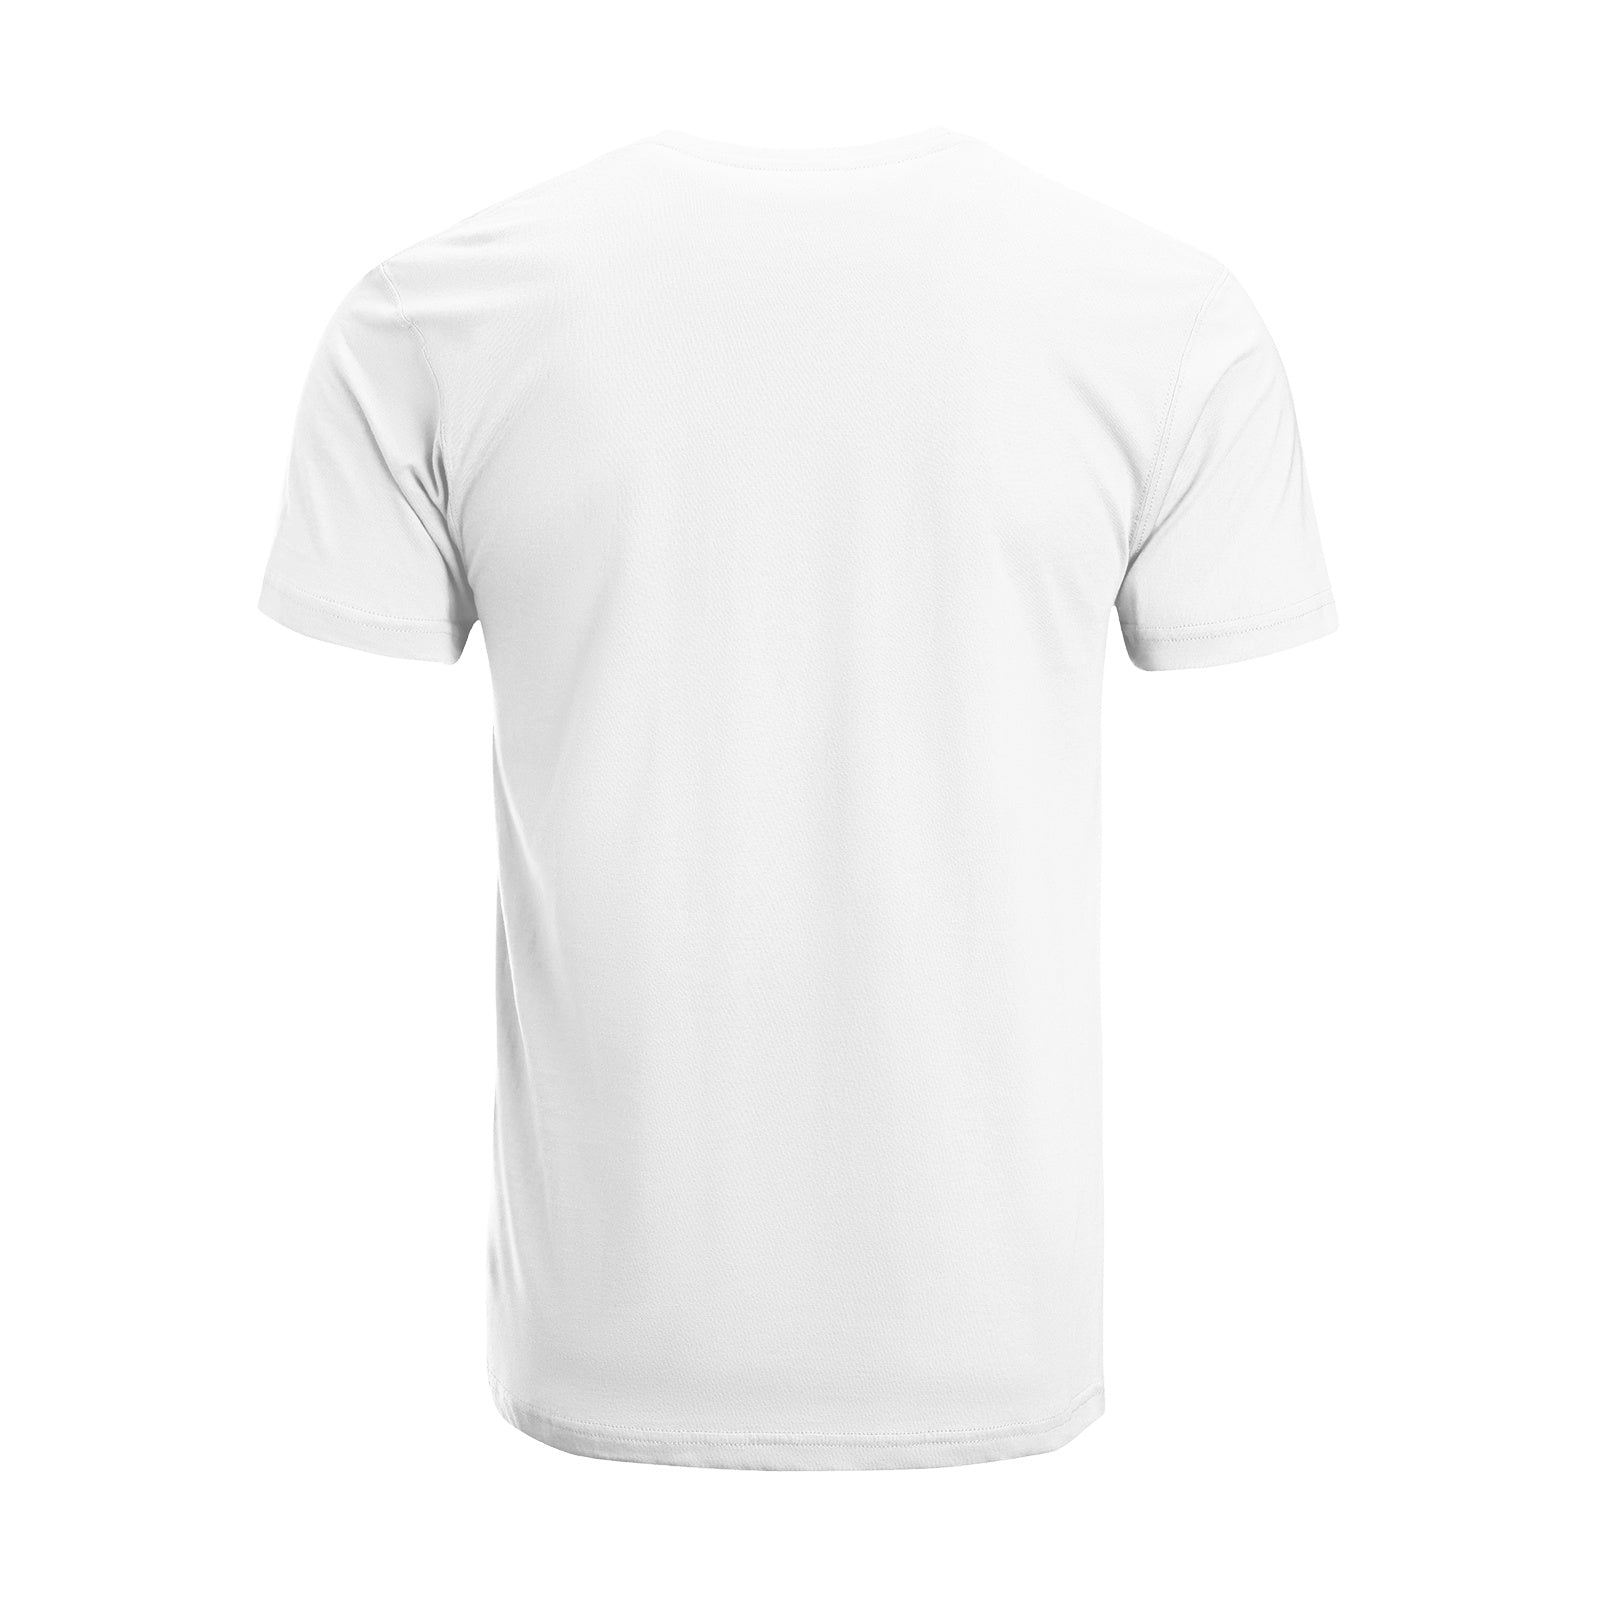 Unisex Short Sleeve Crew Neck Cotton Jersey T-Shirt Cat 14 - Tara-Outfits.com